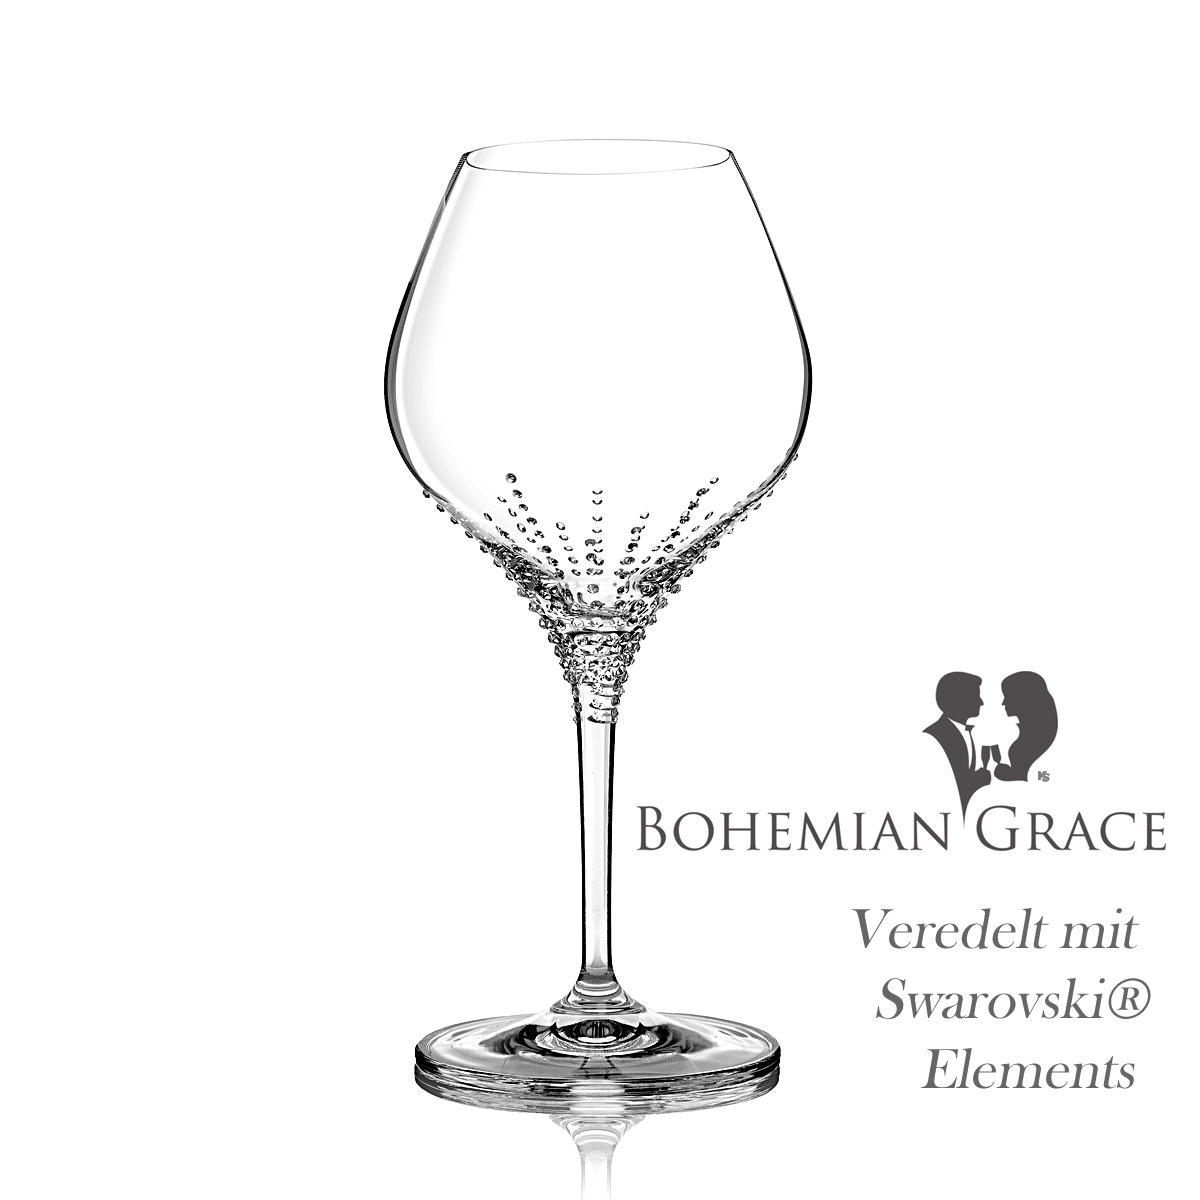 Weinglas 2Stk ENYO Bohemian Grace - Weissweingläser ENYO 2Stk, mit Swarovski Elements